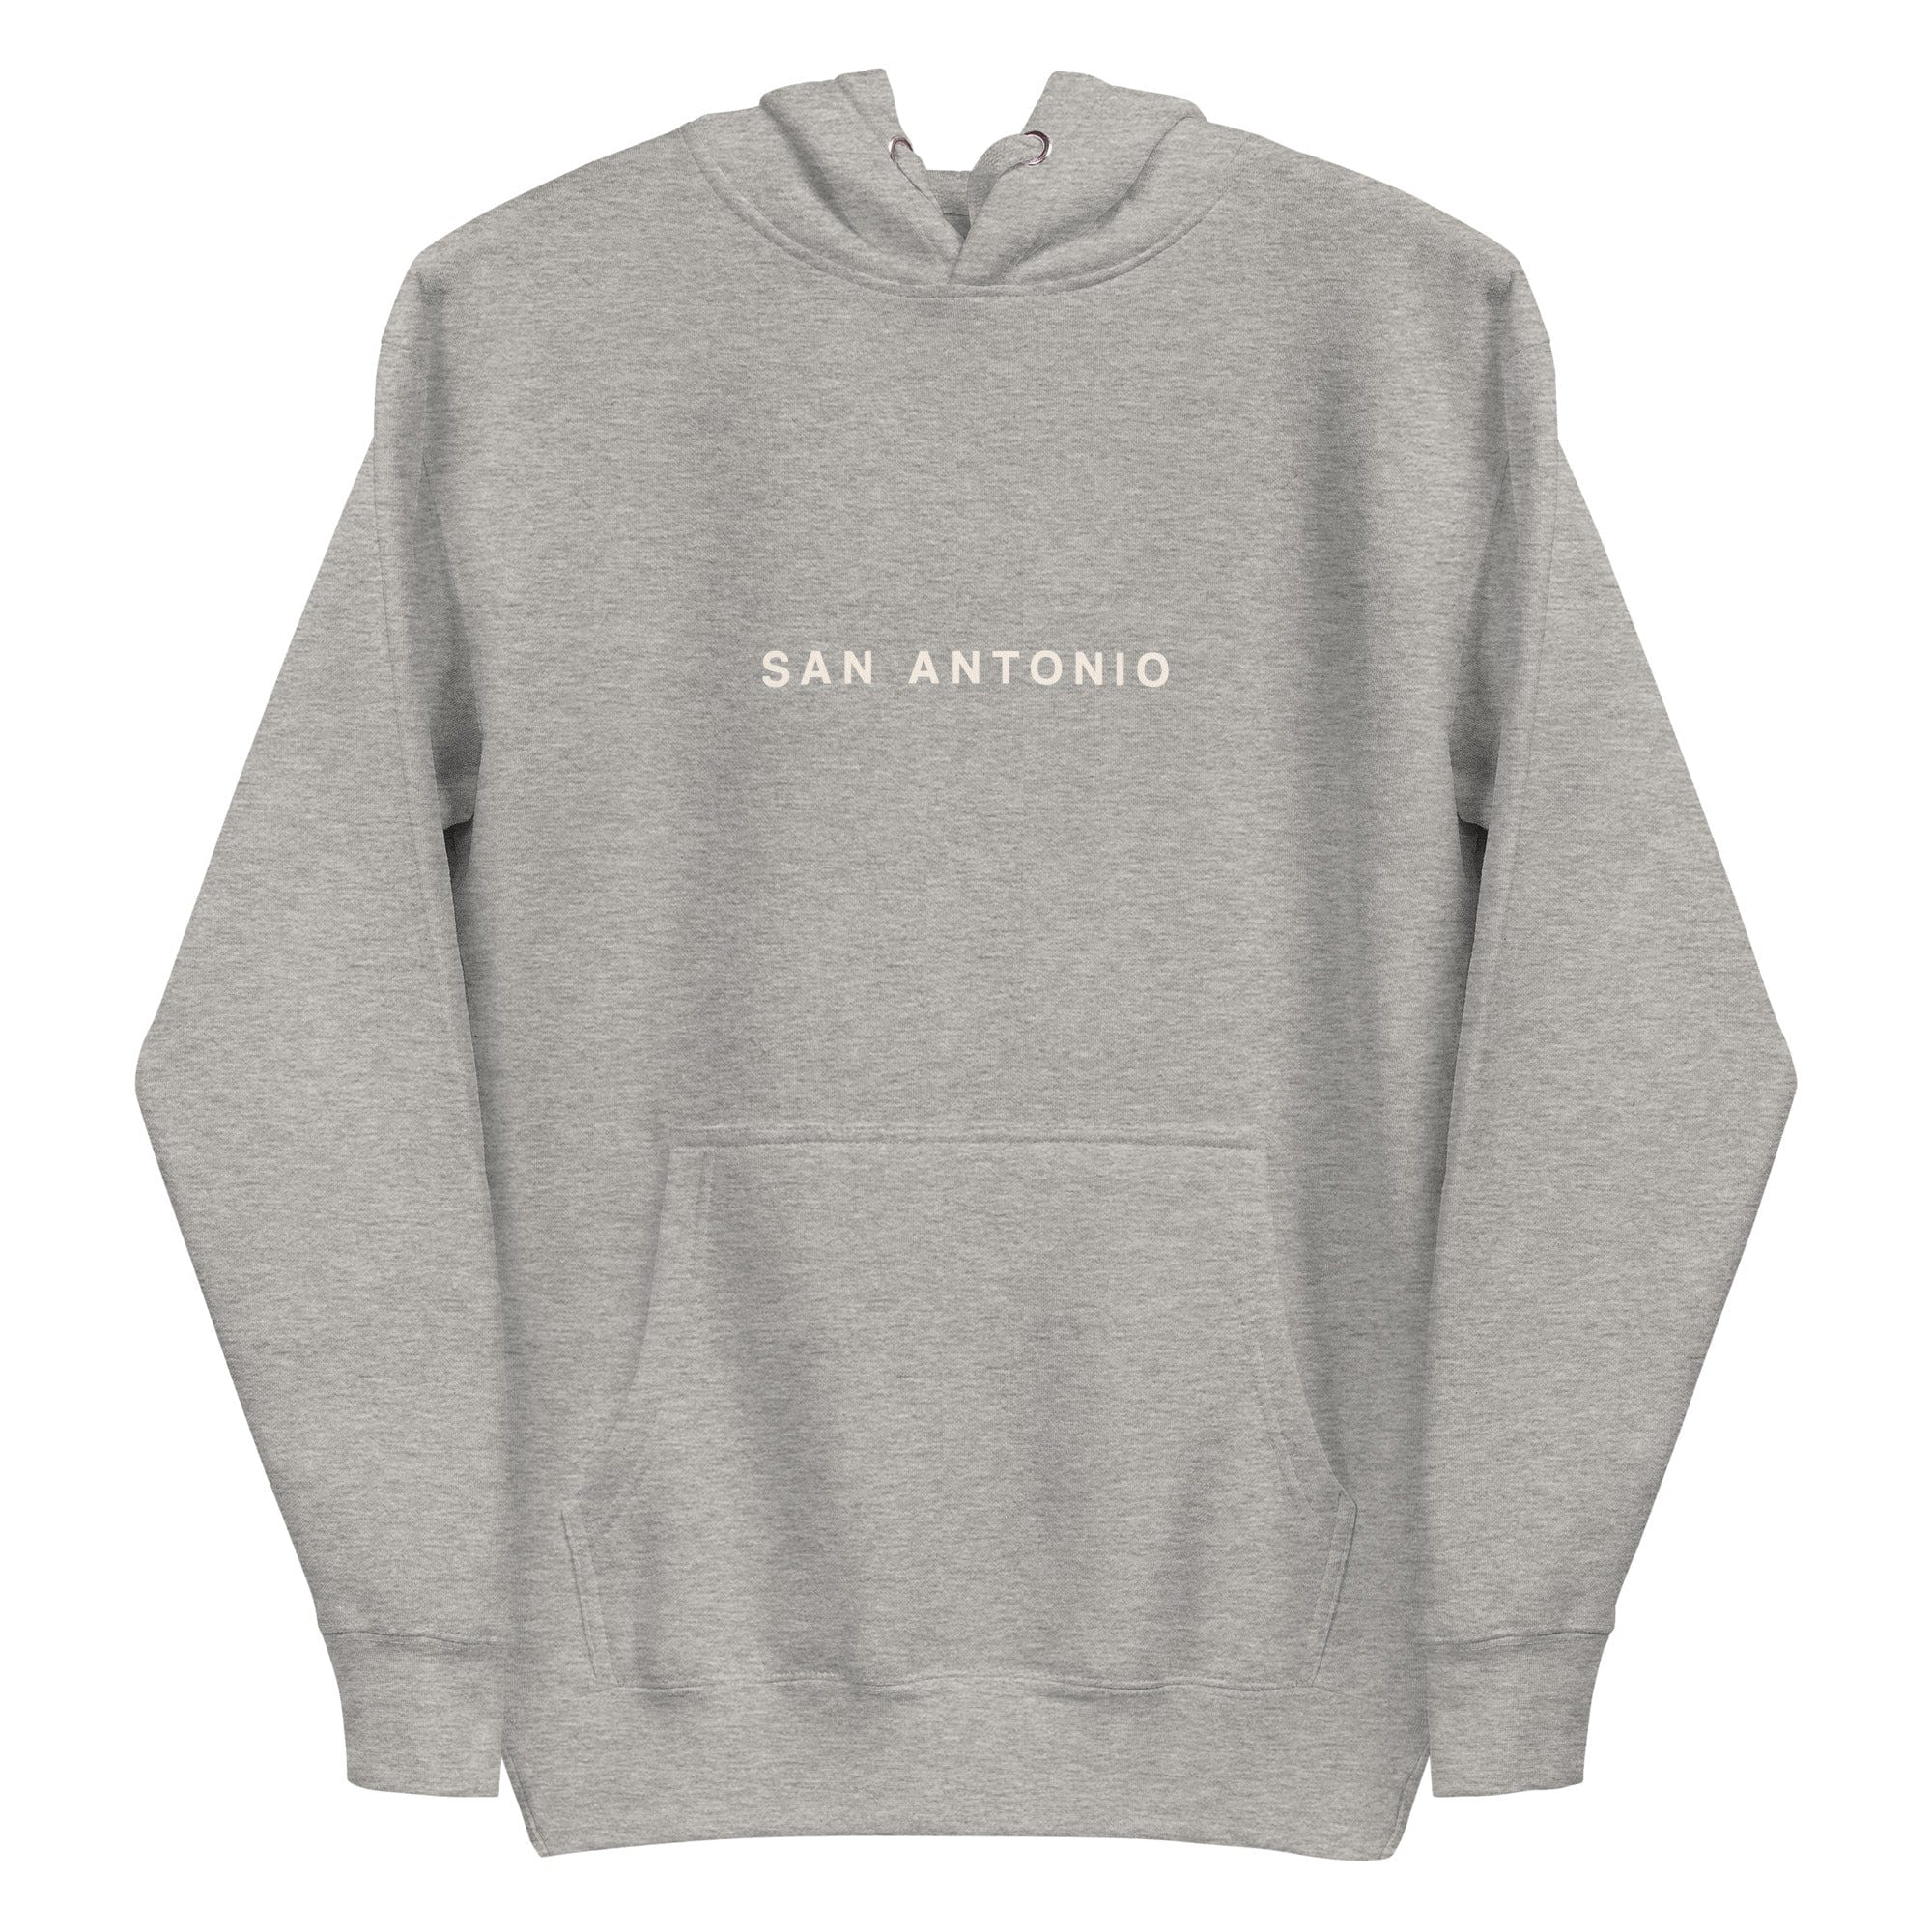 City Shirt Co San Antonio Hoodie Carbon Grey / S